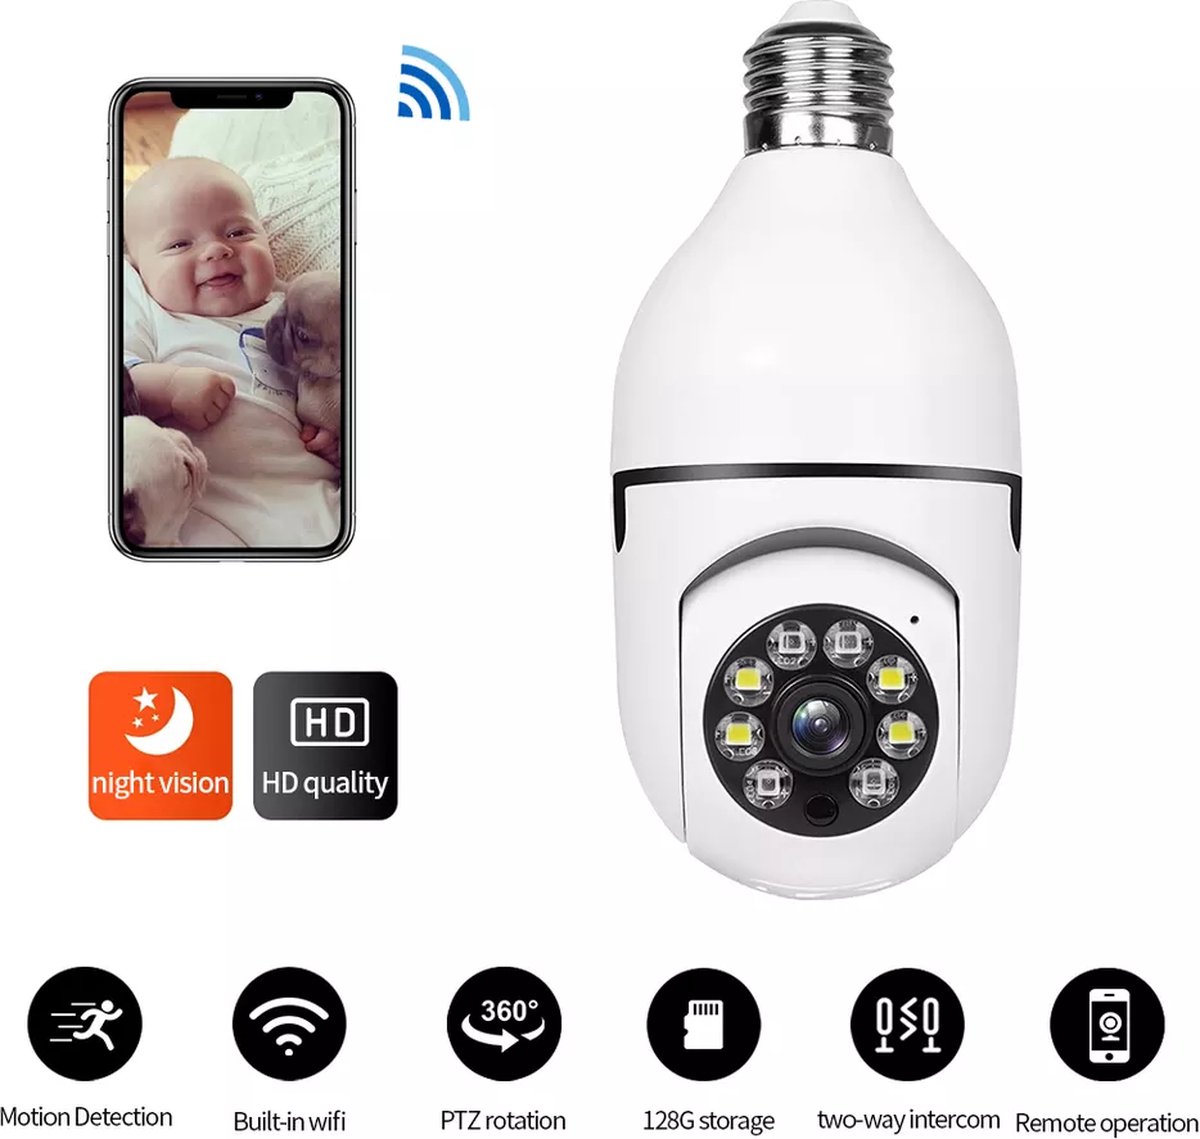 Wifi Panorama Camera - 1080p- 5g -Beveiligingscamera - IP Camera - Camerabewaking - E27 Dikke Fitting- Spy Camera - 2-Weg Audio - Beweeg en Geluidsdetectie - Nachtvisie - Draadloos - Huisdiercamera - Opslag in Cloud & App - Lamp - 360graden